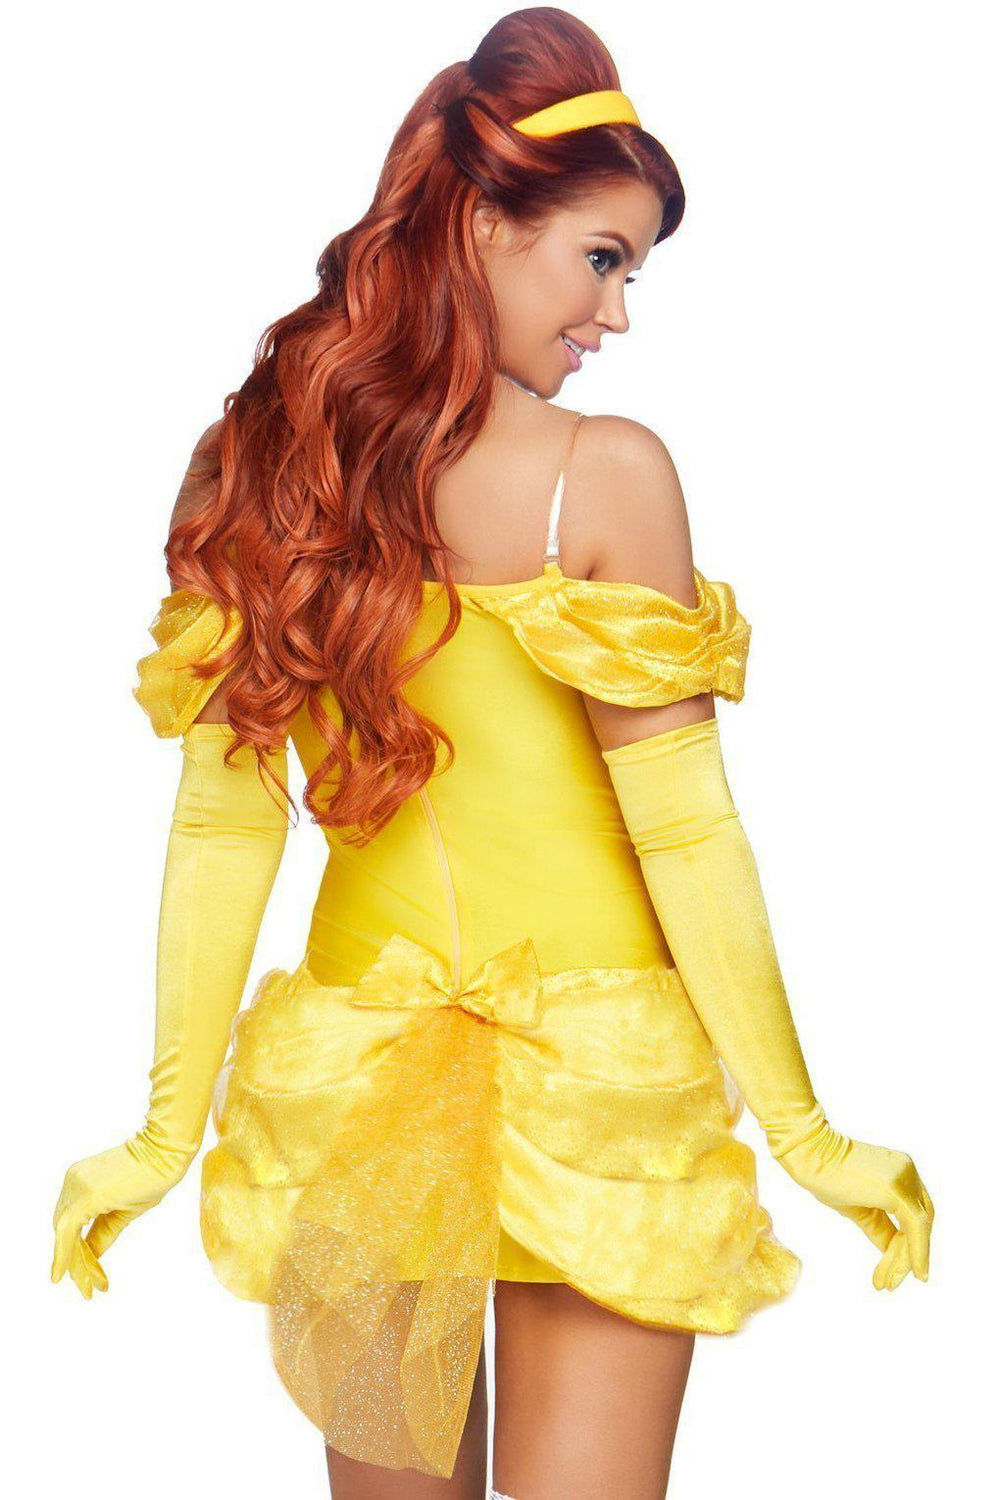 Storybook Bombshell Costume-Princess Costumes-Leg Avenue-SEXYSHOES.COM